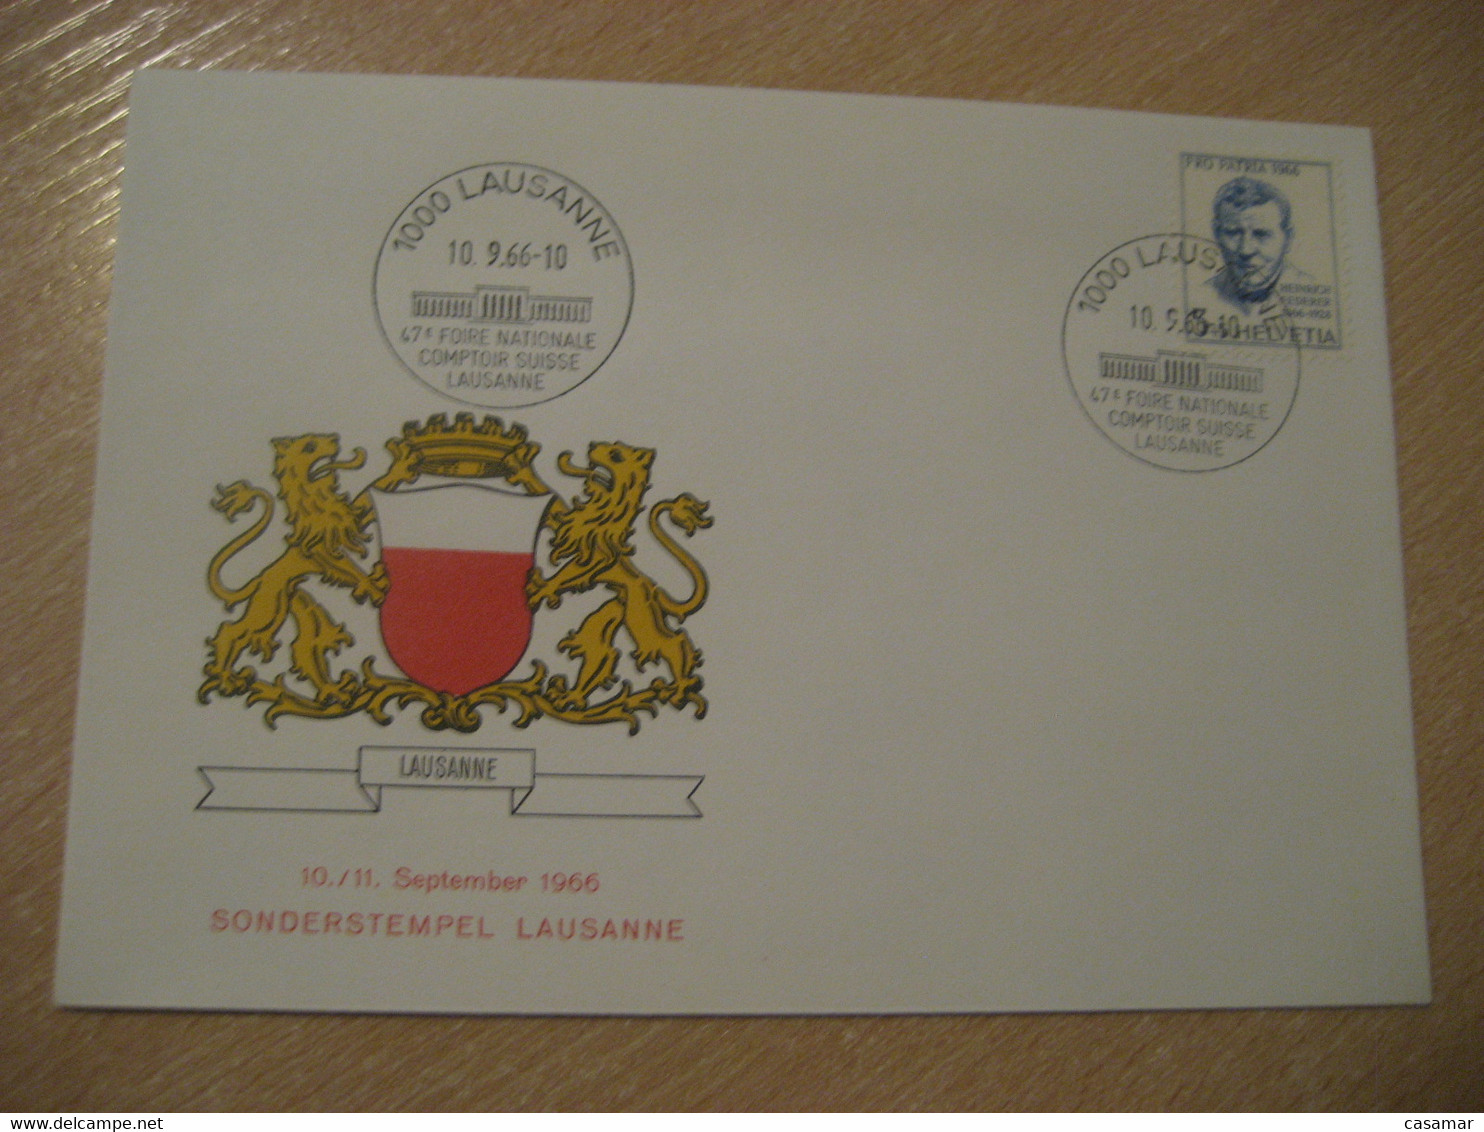 LAUSANNE 1966 Comptoir Suisse Fair Cancel Cover Heinrich Federer Writer Literature Religion SWITZERLAND - Ecrivains